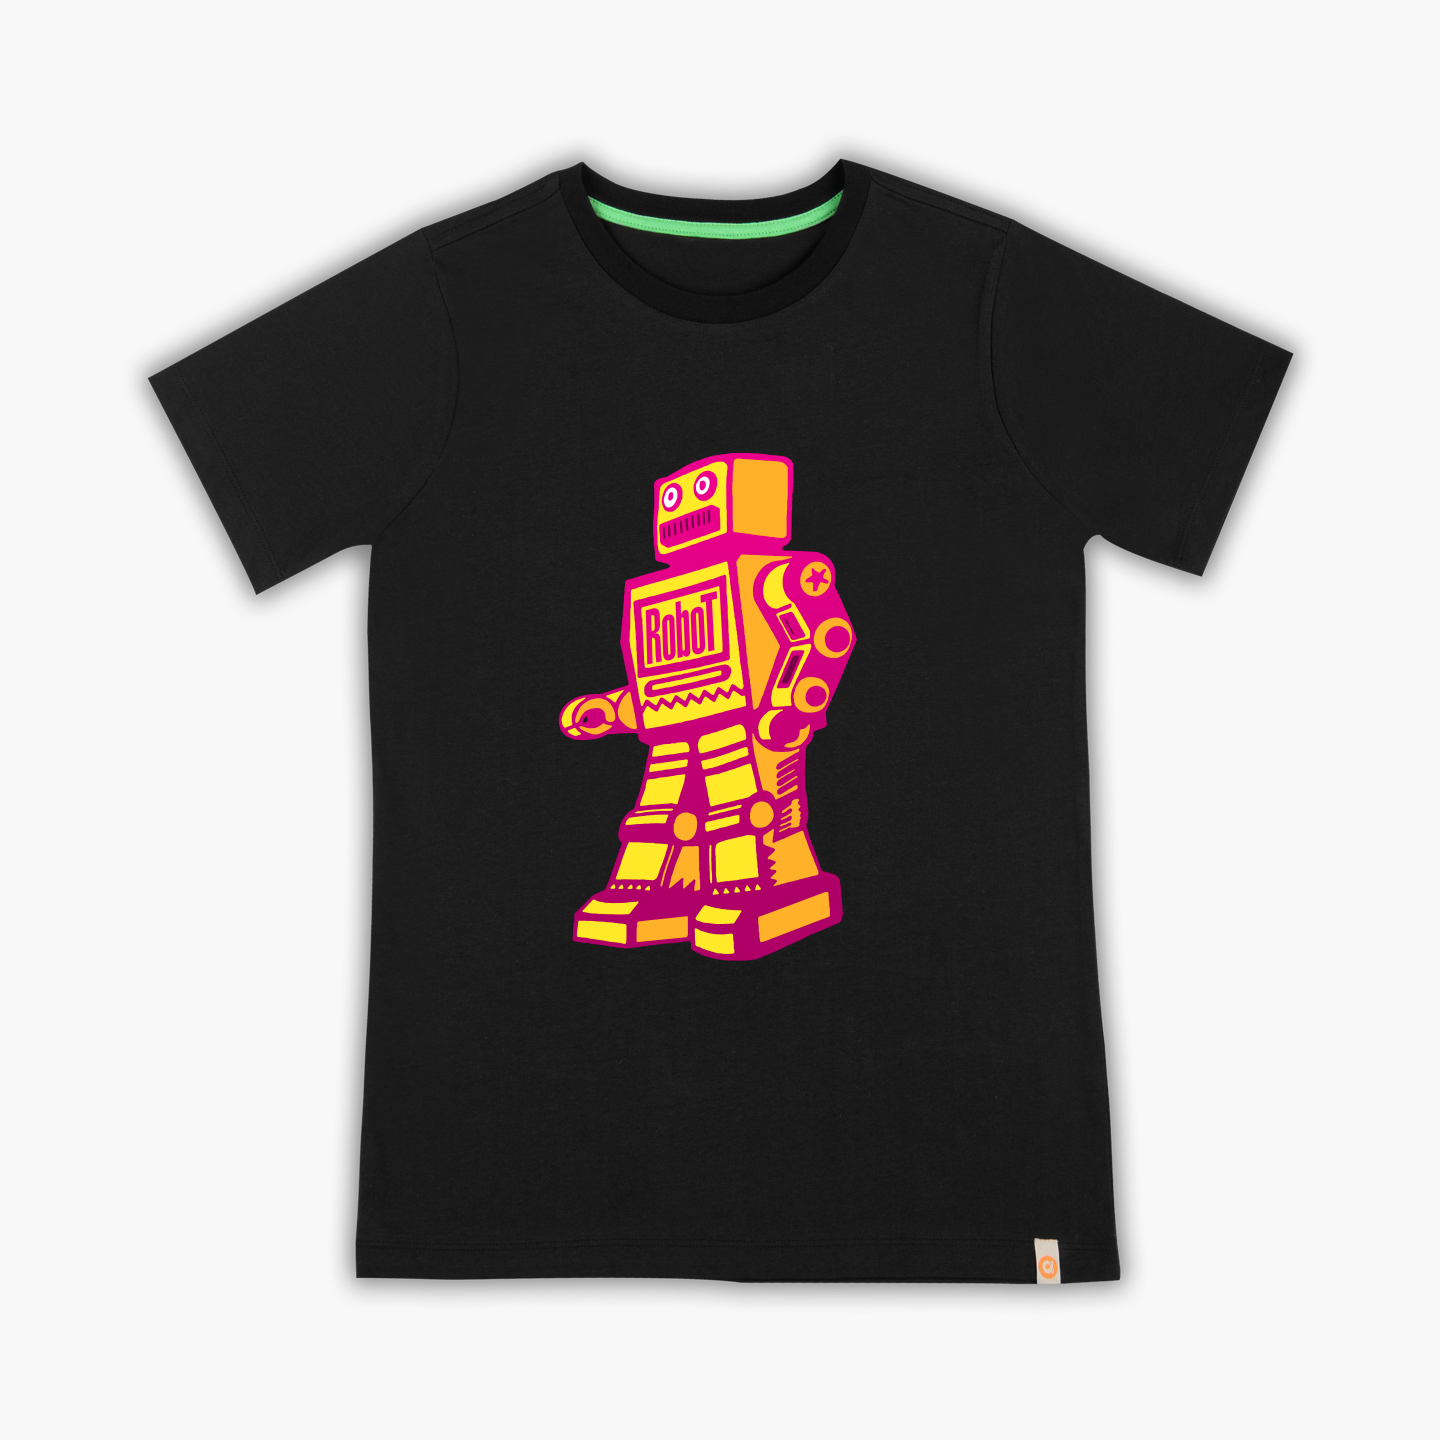 Retro Robot 2 - Tişört